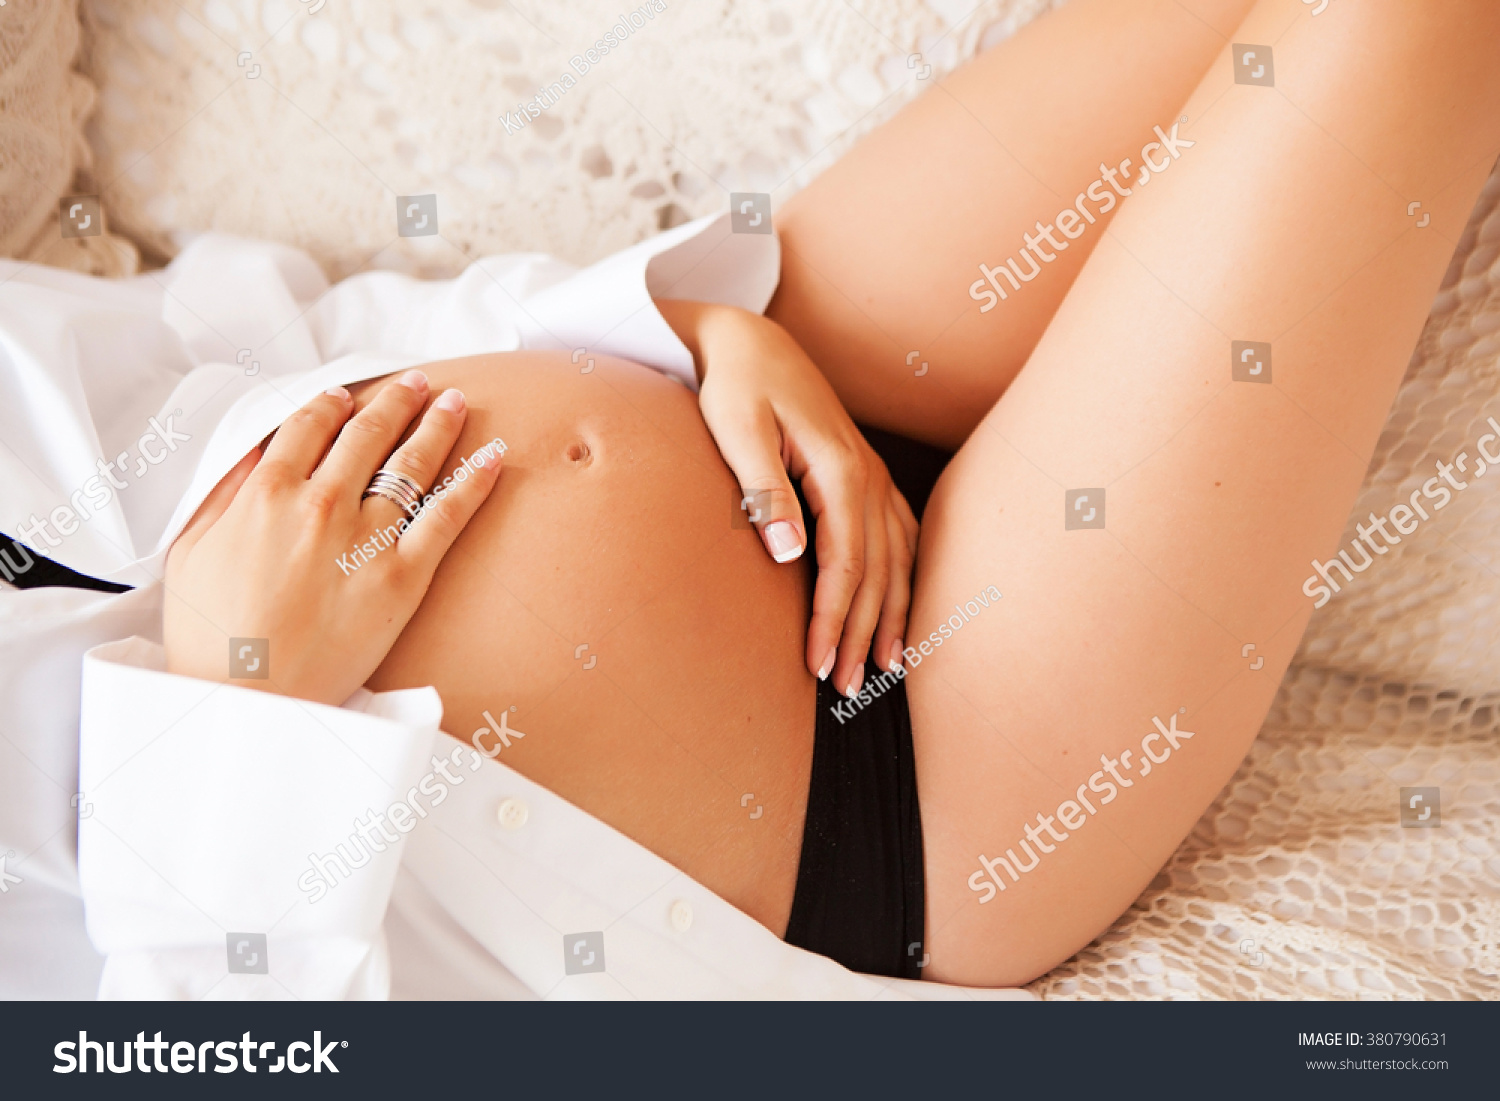 Pregnancy Sexual 69